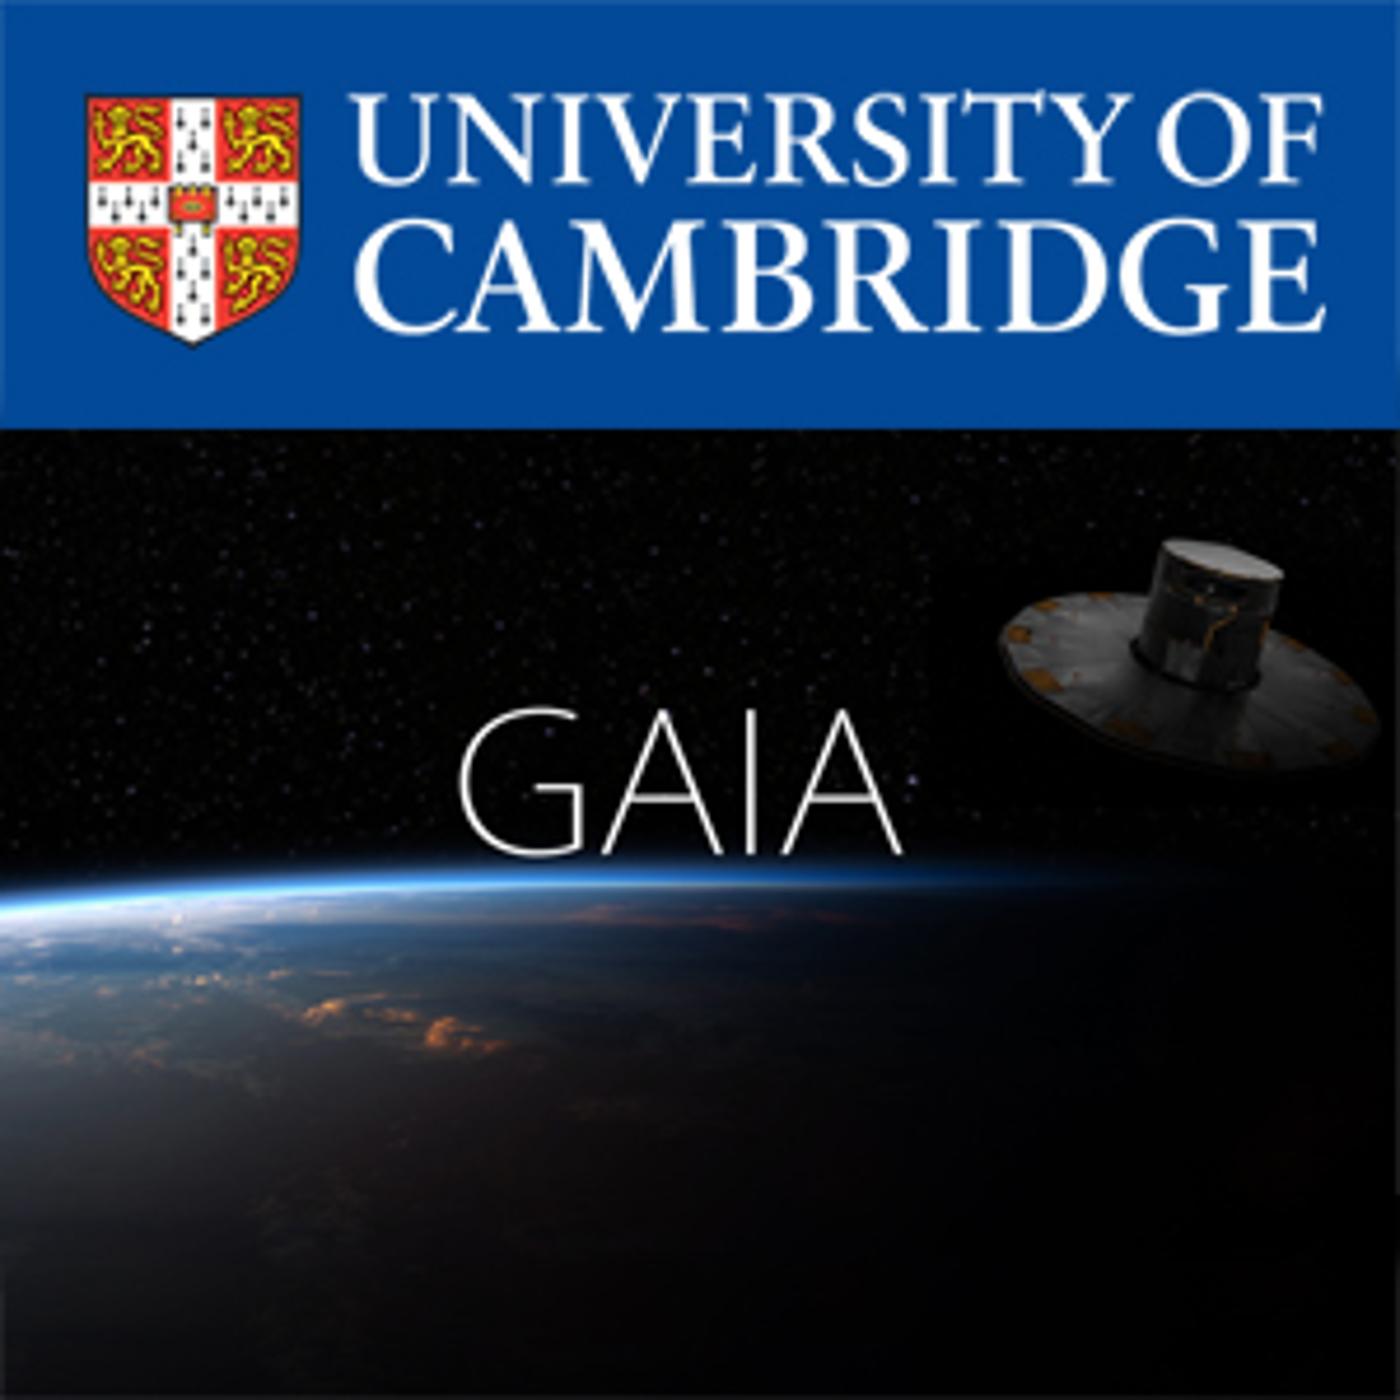 Gaia's mission: solving the celestial puzzle